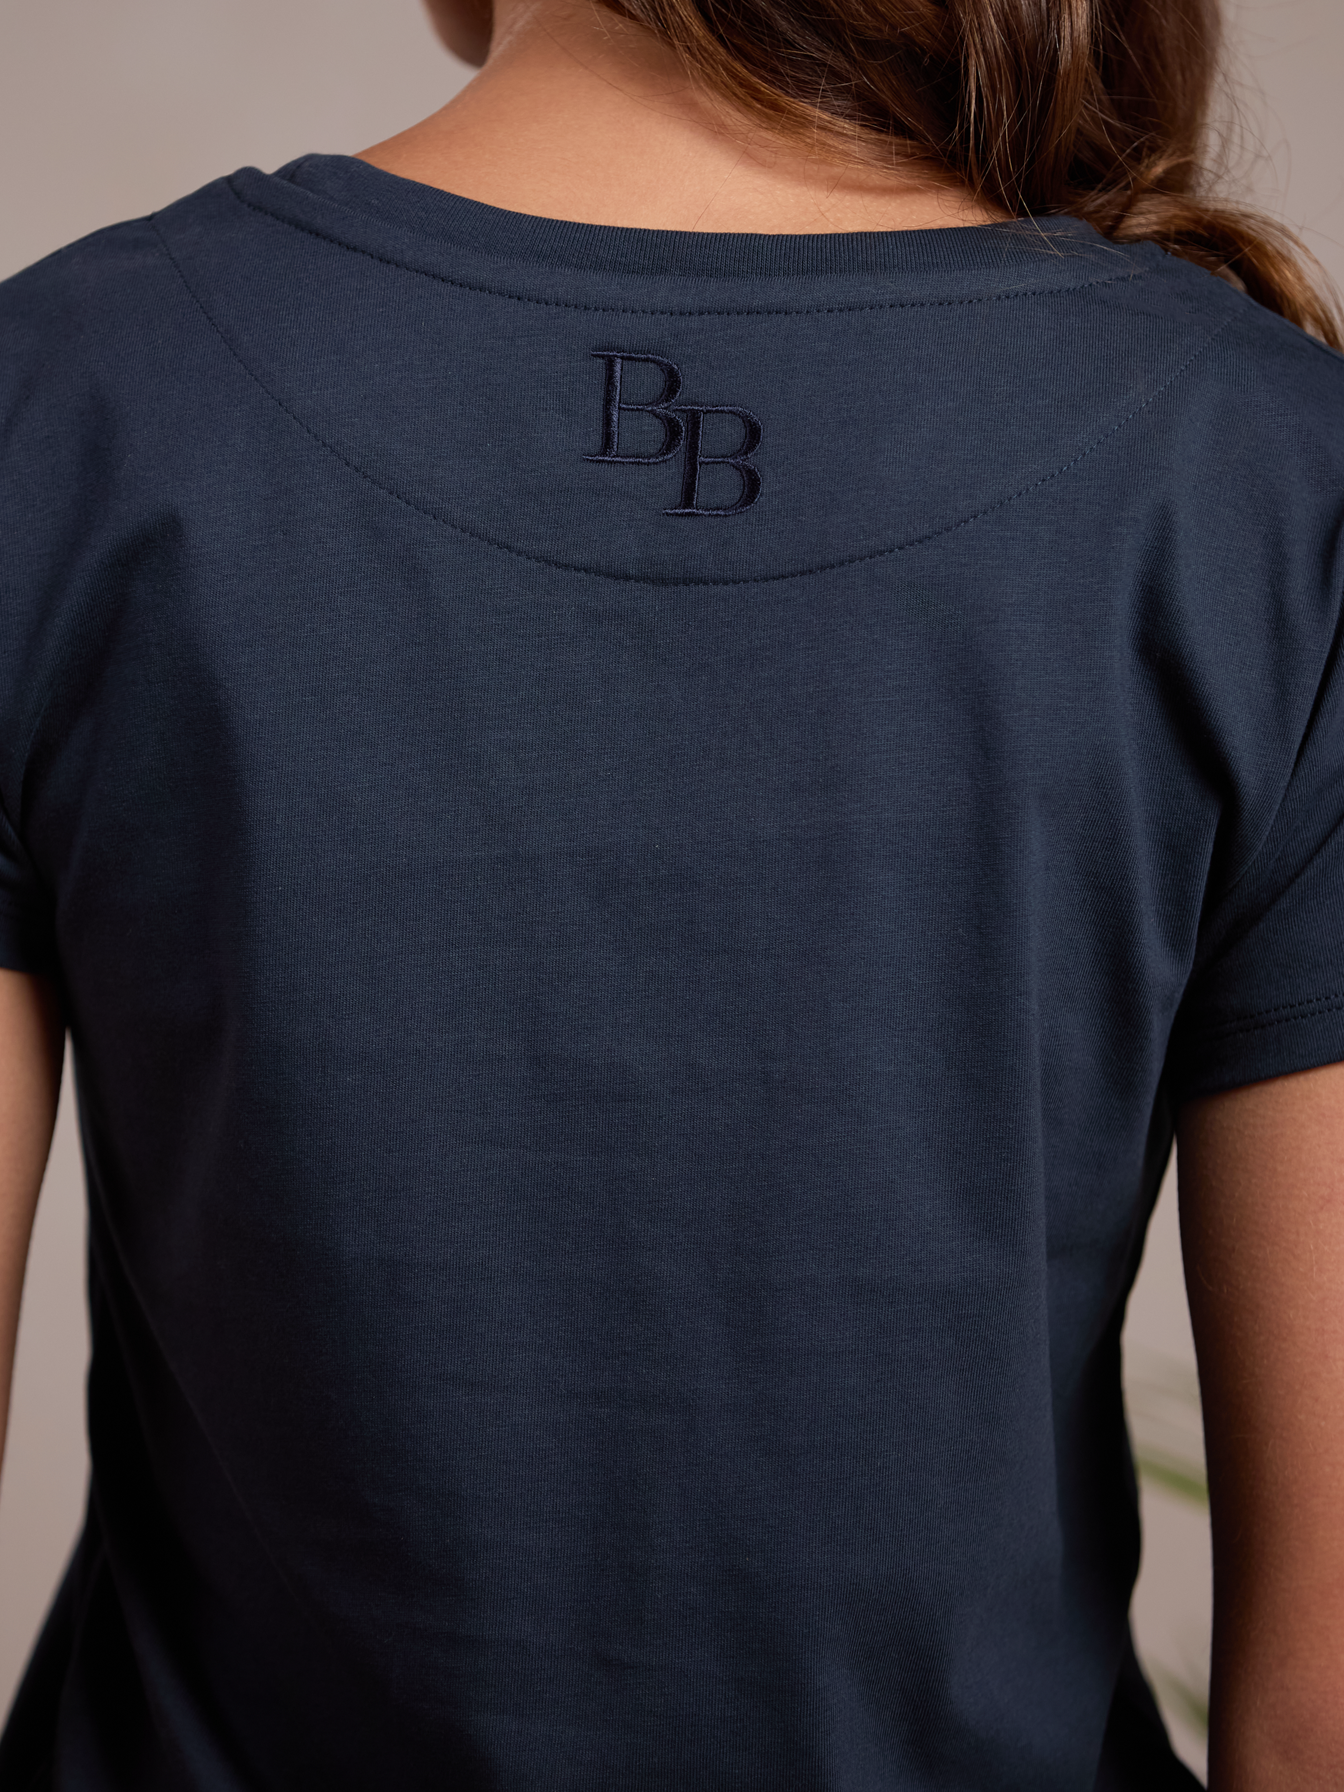 Bolberry Women's T-Shirt - Navy